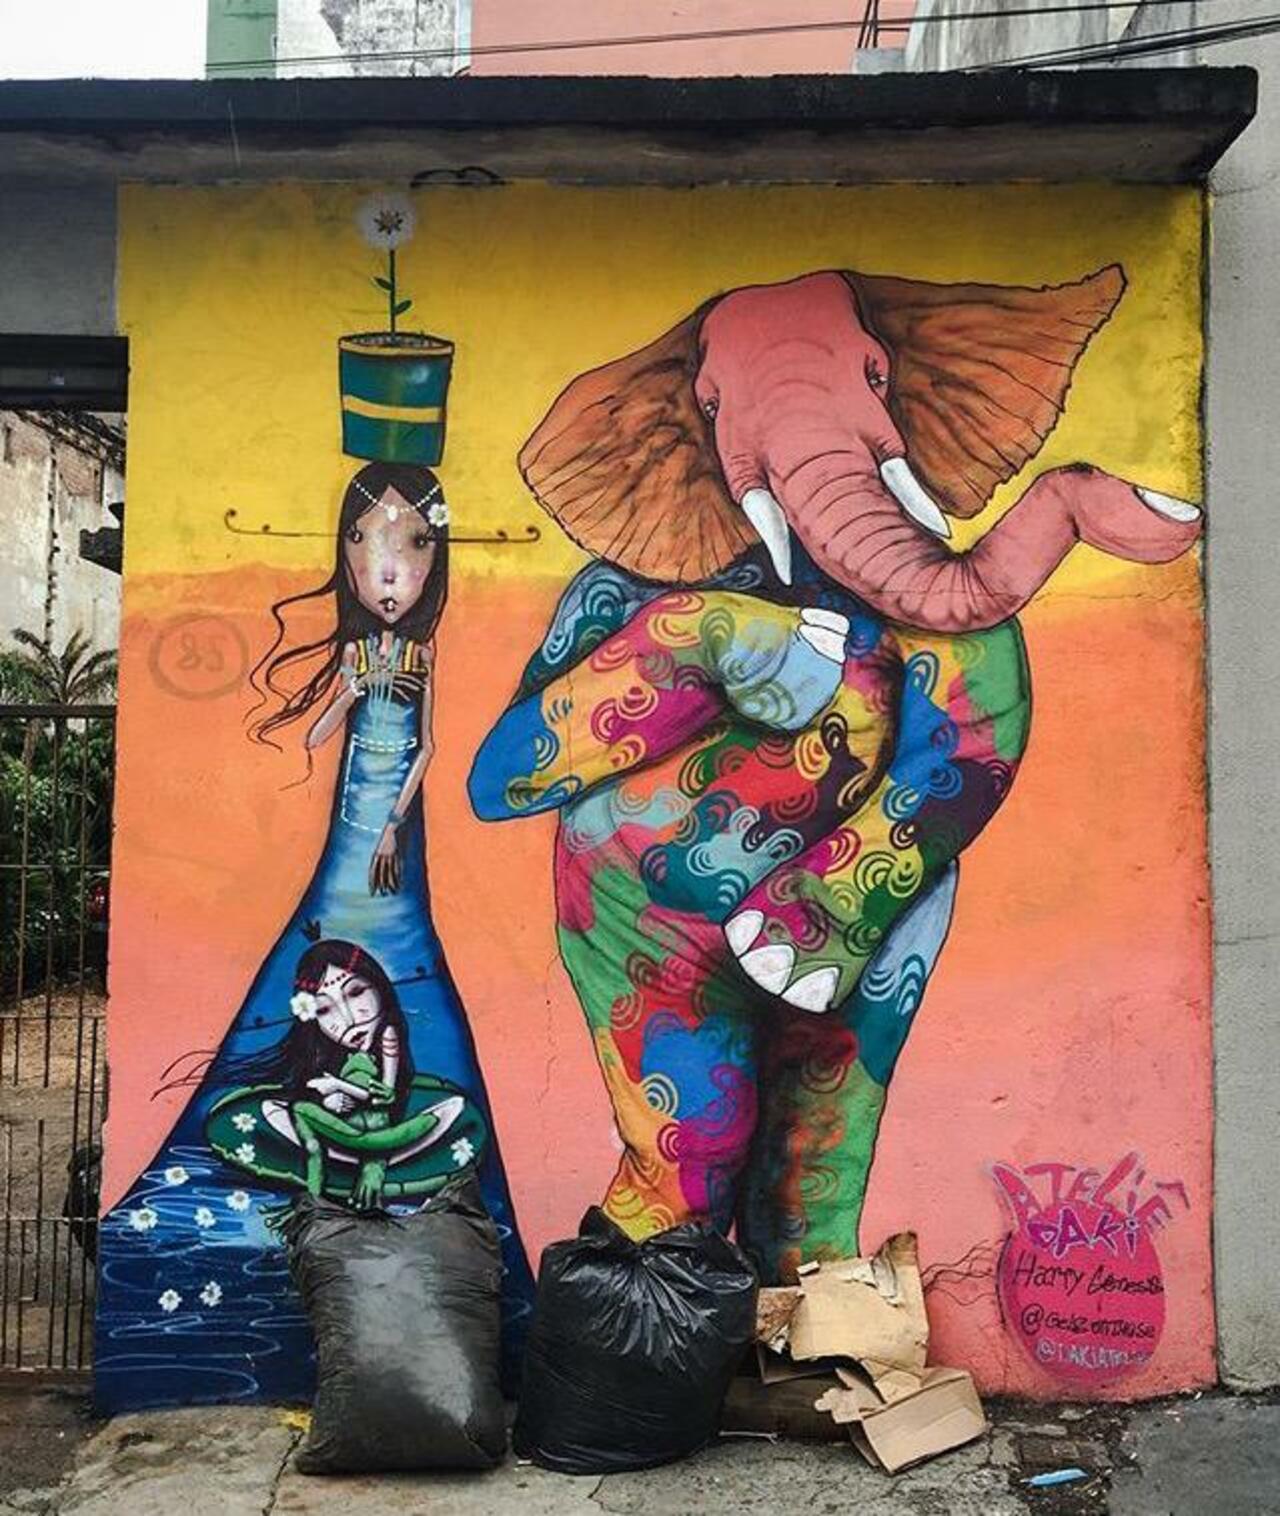 Street Art by Harry Geneis & Gelson in São Paulo #art #mural #graffiti #streetart http://t.co/SlLbhuMZfD … … …… … http://twitter.com/GoogleStreetArt/status/648016473831645184/photo/1/large?utm_source=fb&utm_medium=fb&utm_campaign=charlesjackso14&utm_content=648025158012289024